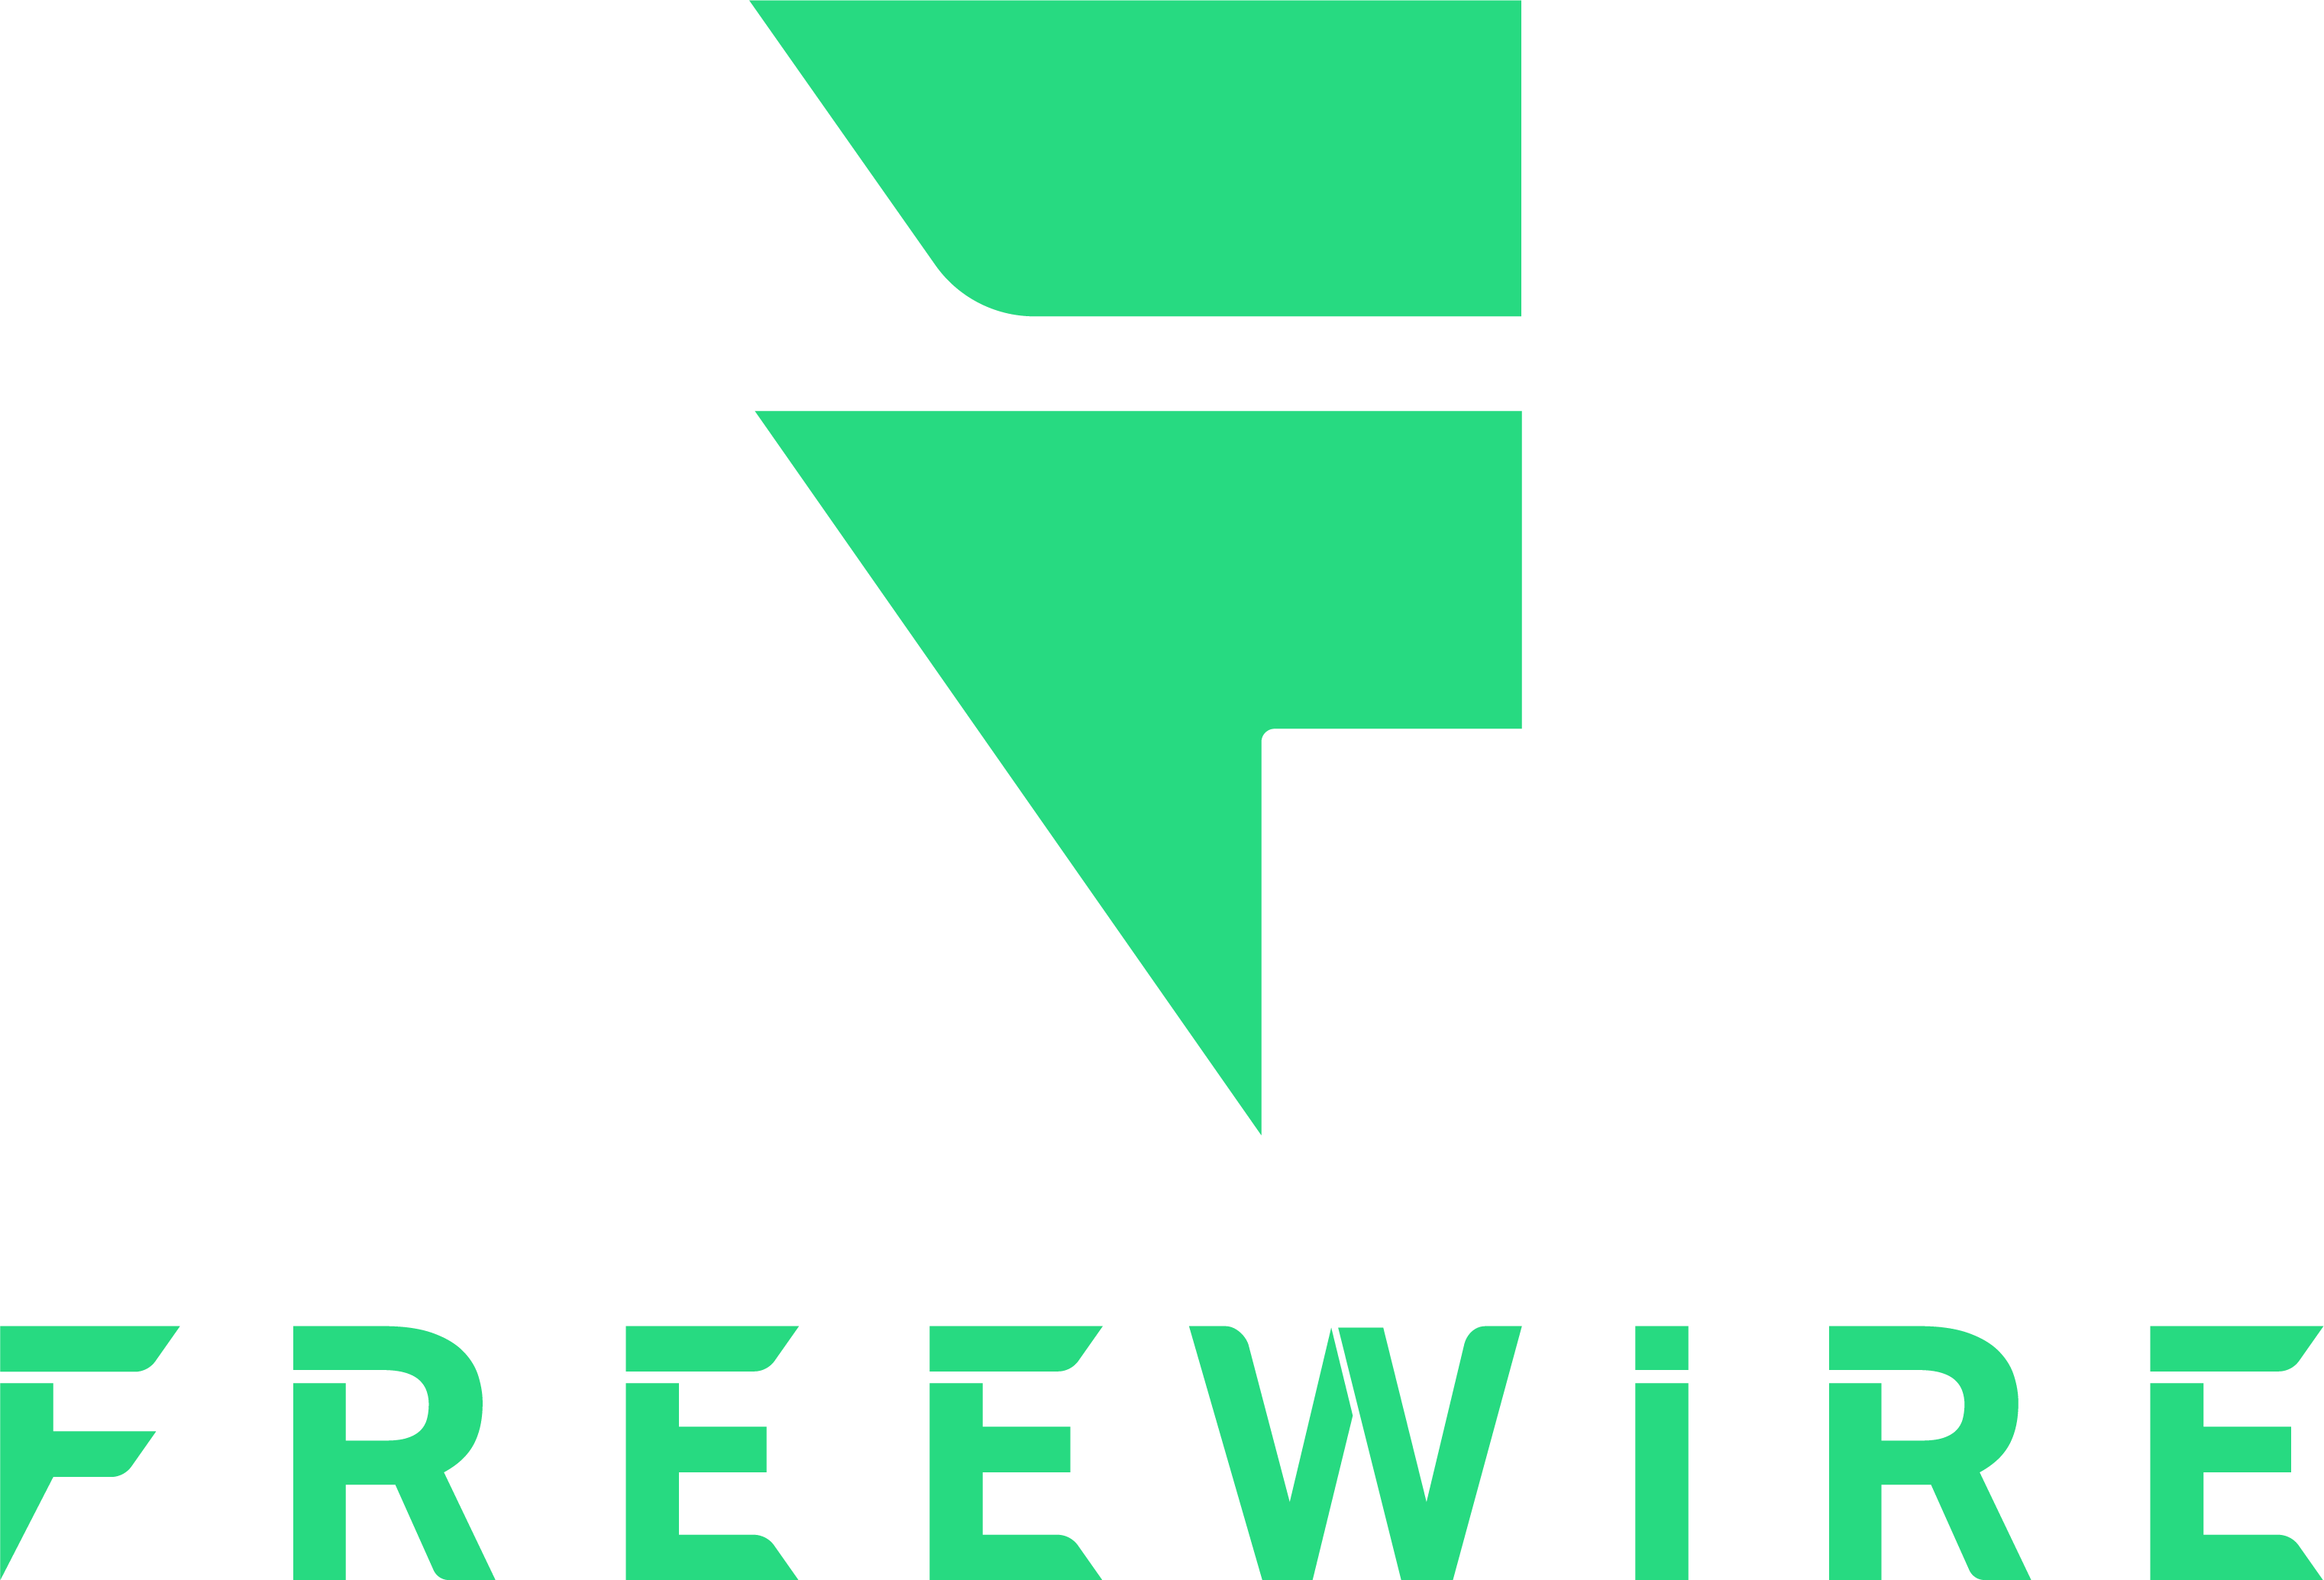 FreeWire_logos_RGB_freewire_vertical_mark_green